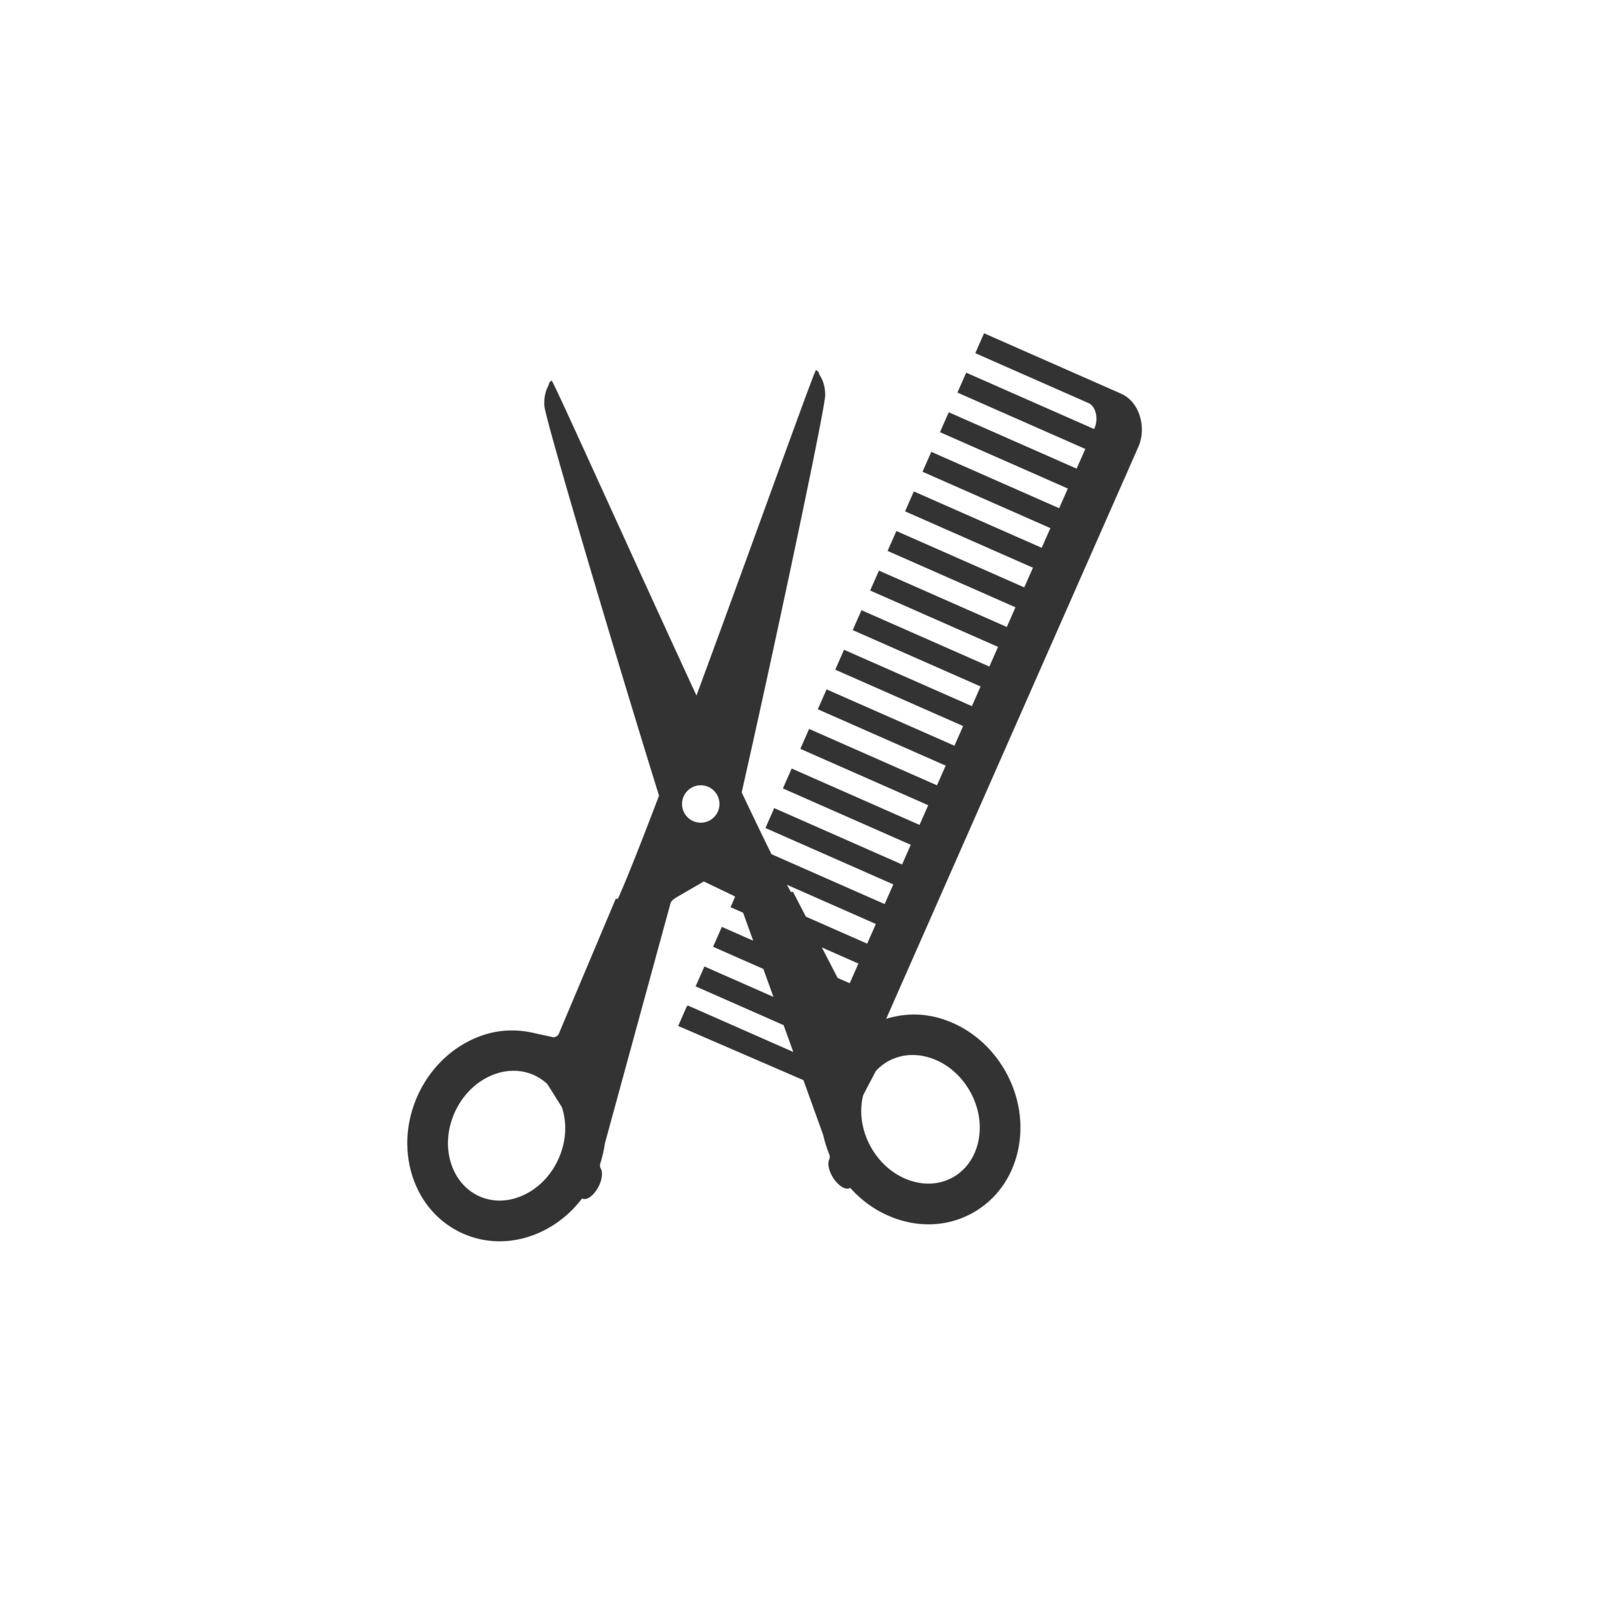 Scissors and comb icon. Vector illustration, flat